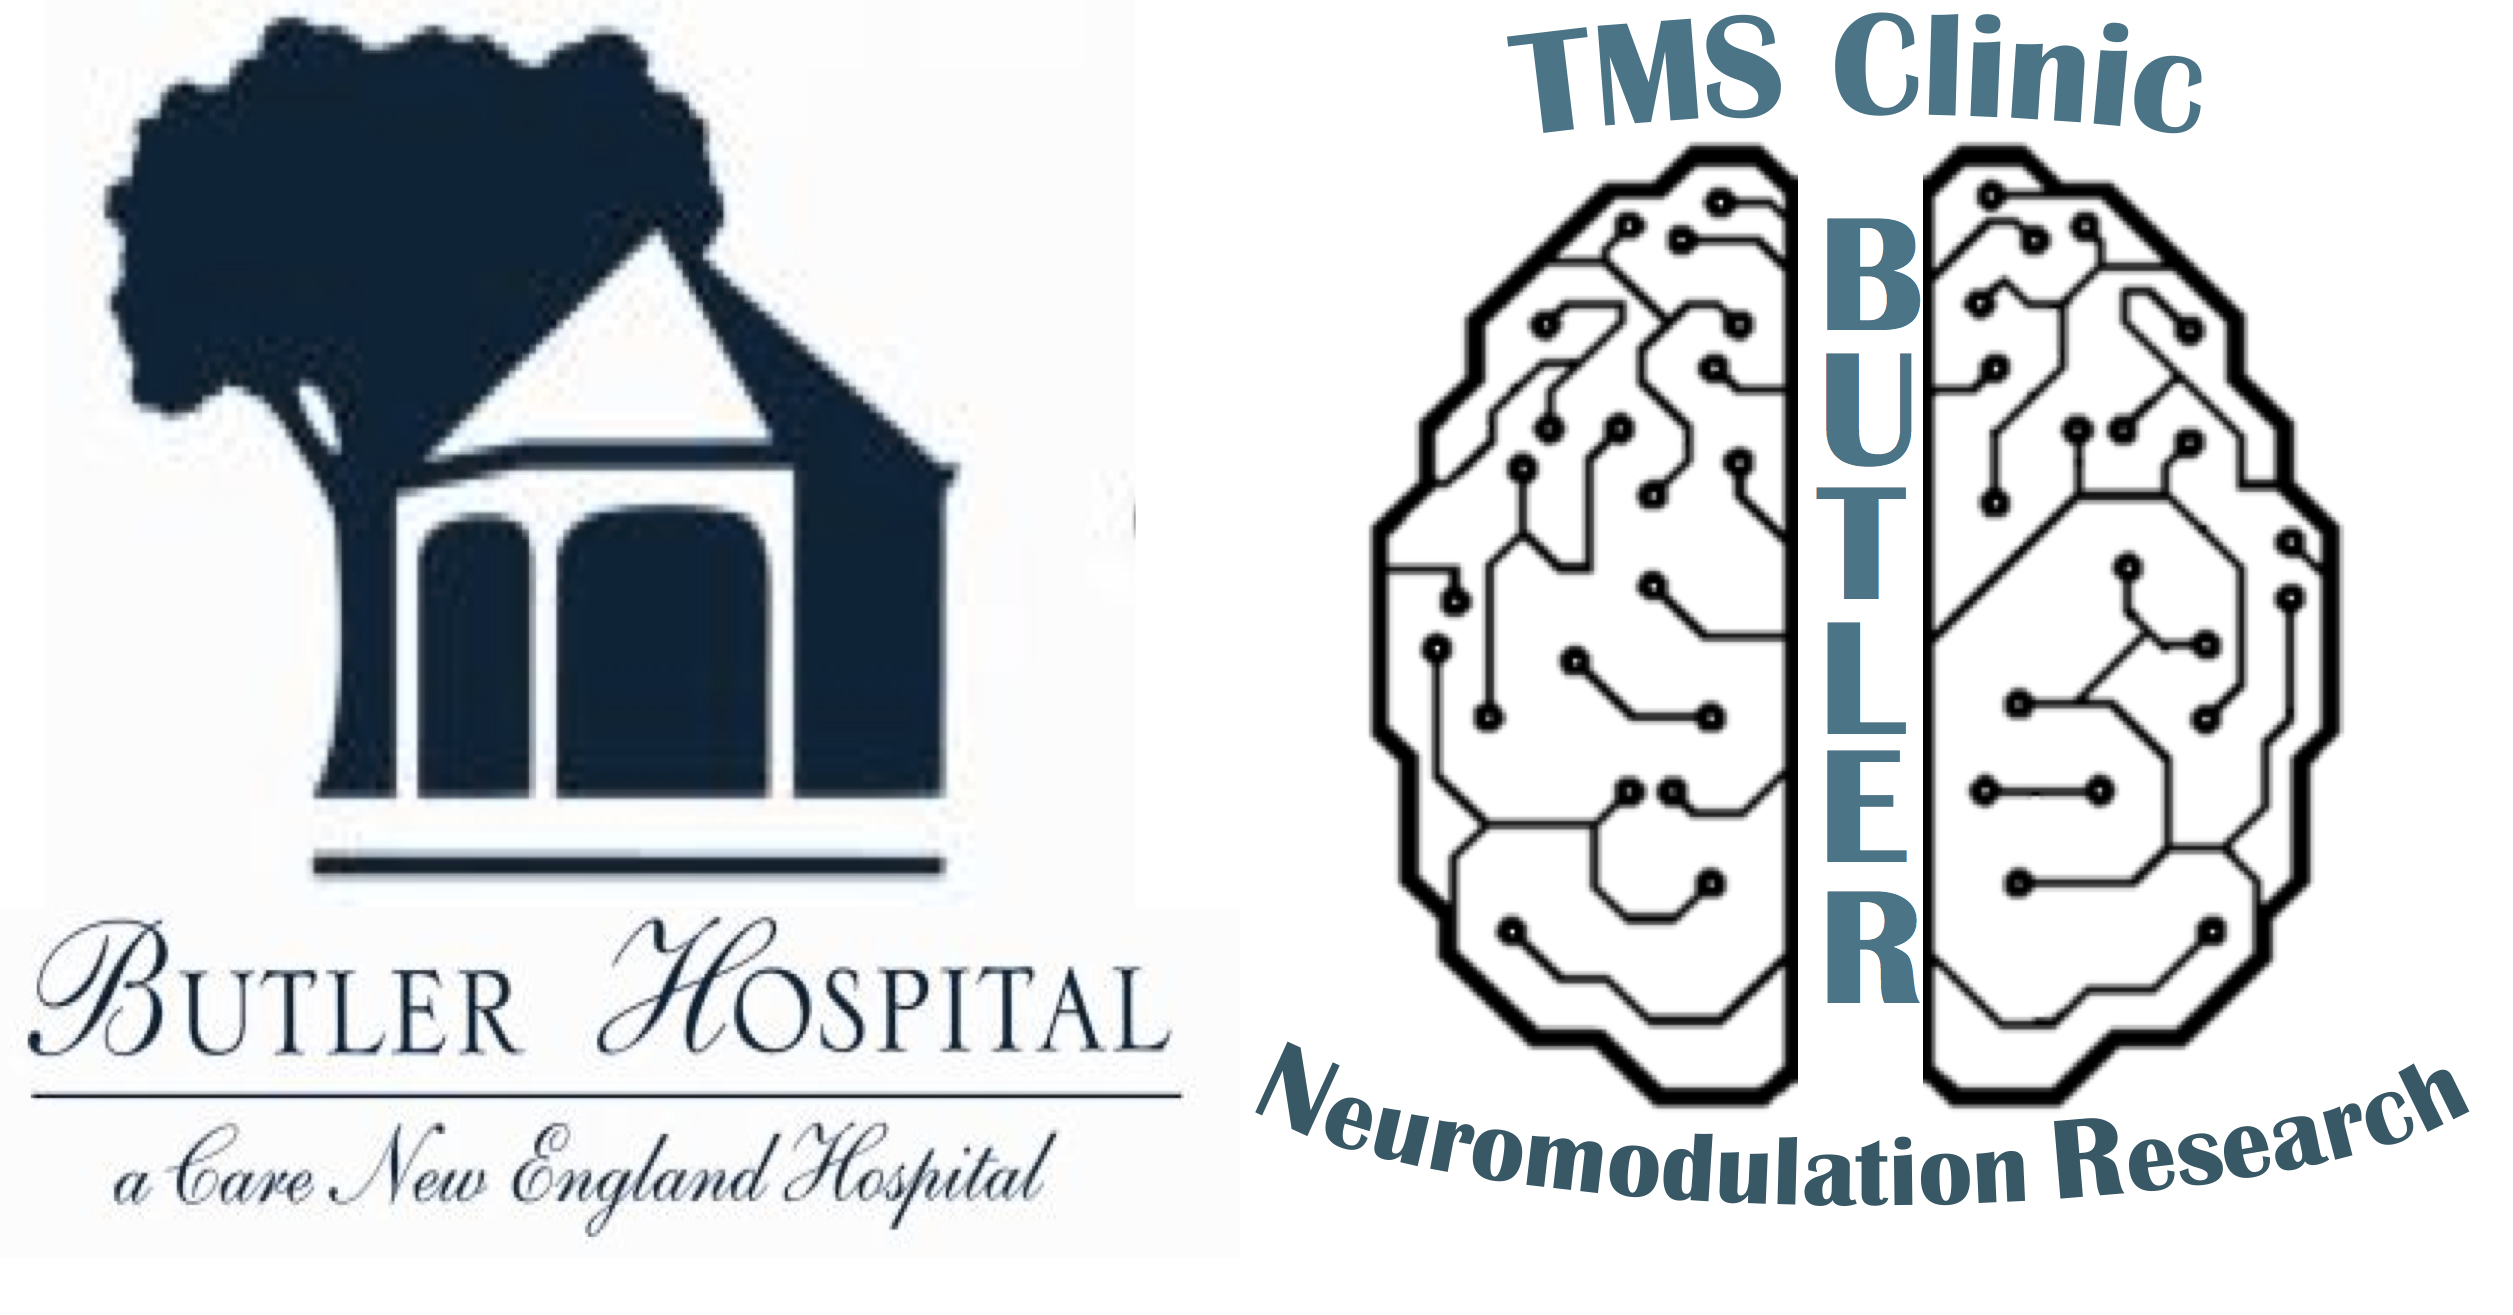 Butler Hospital TMS Clinic logo